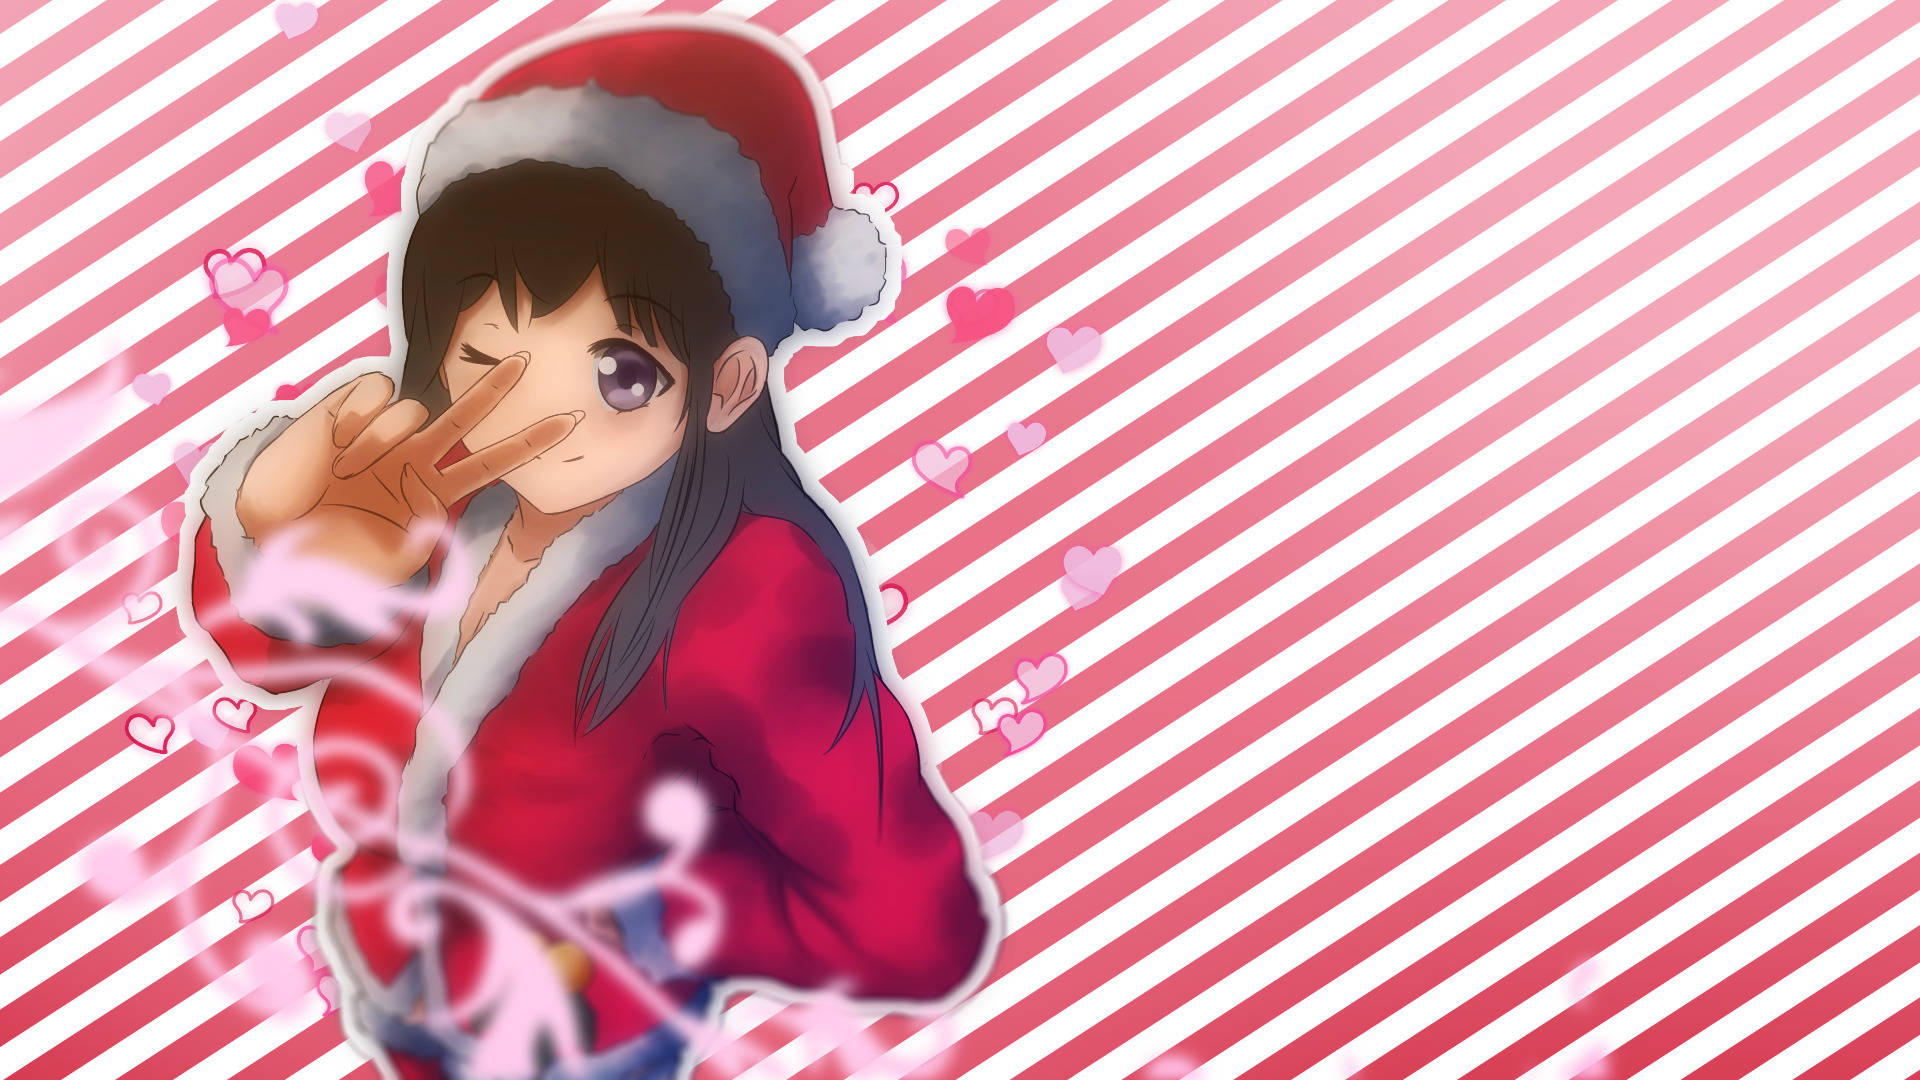 Anime Girl Christmas With Stripes Backdrop Wallpaper